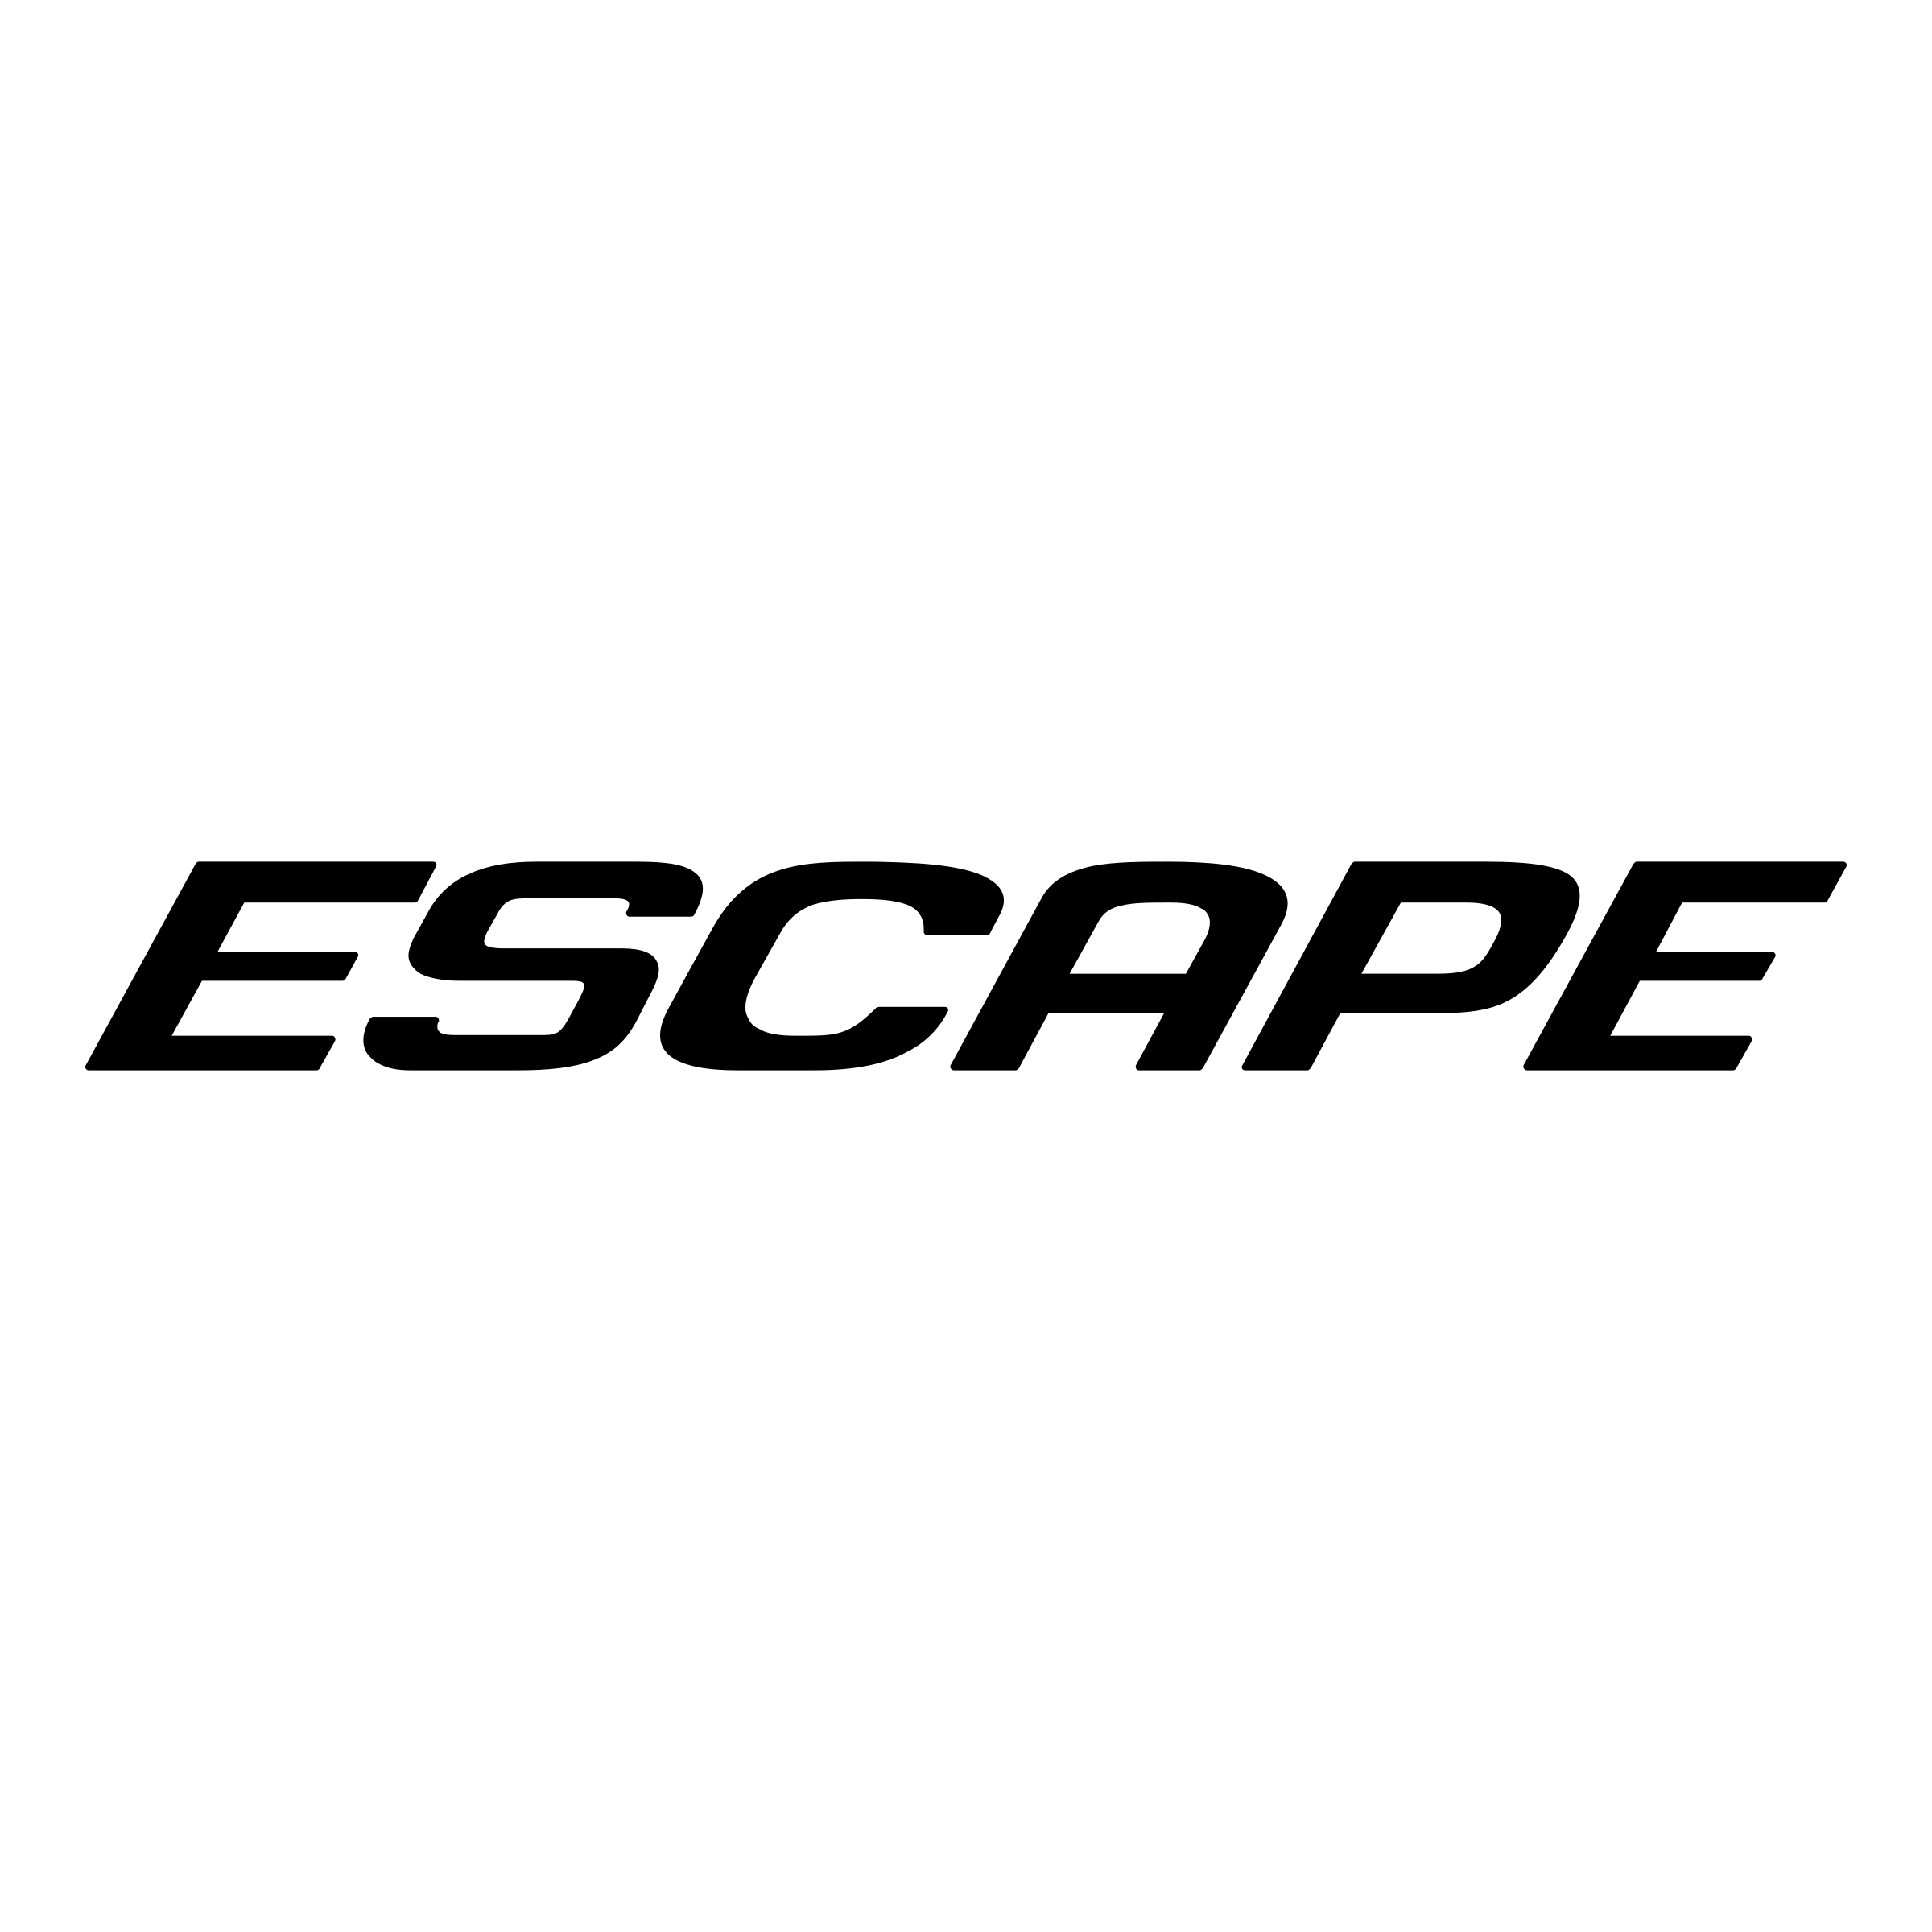 Escape Logo - Escape Logo PNG Transparent & SVG Vector - Freebie Supply